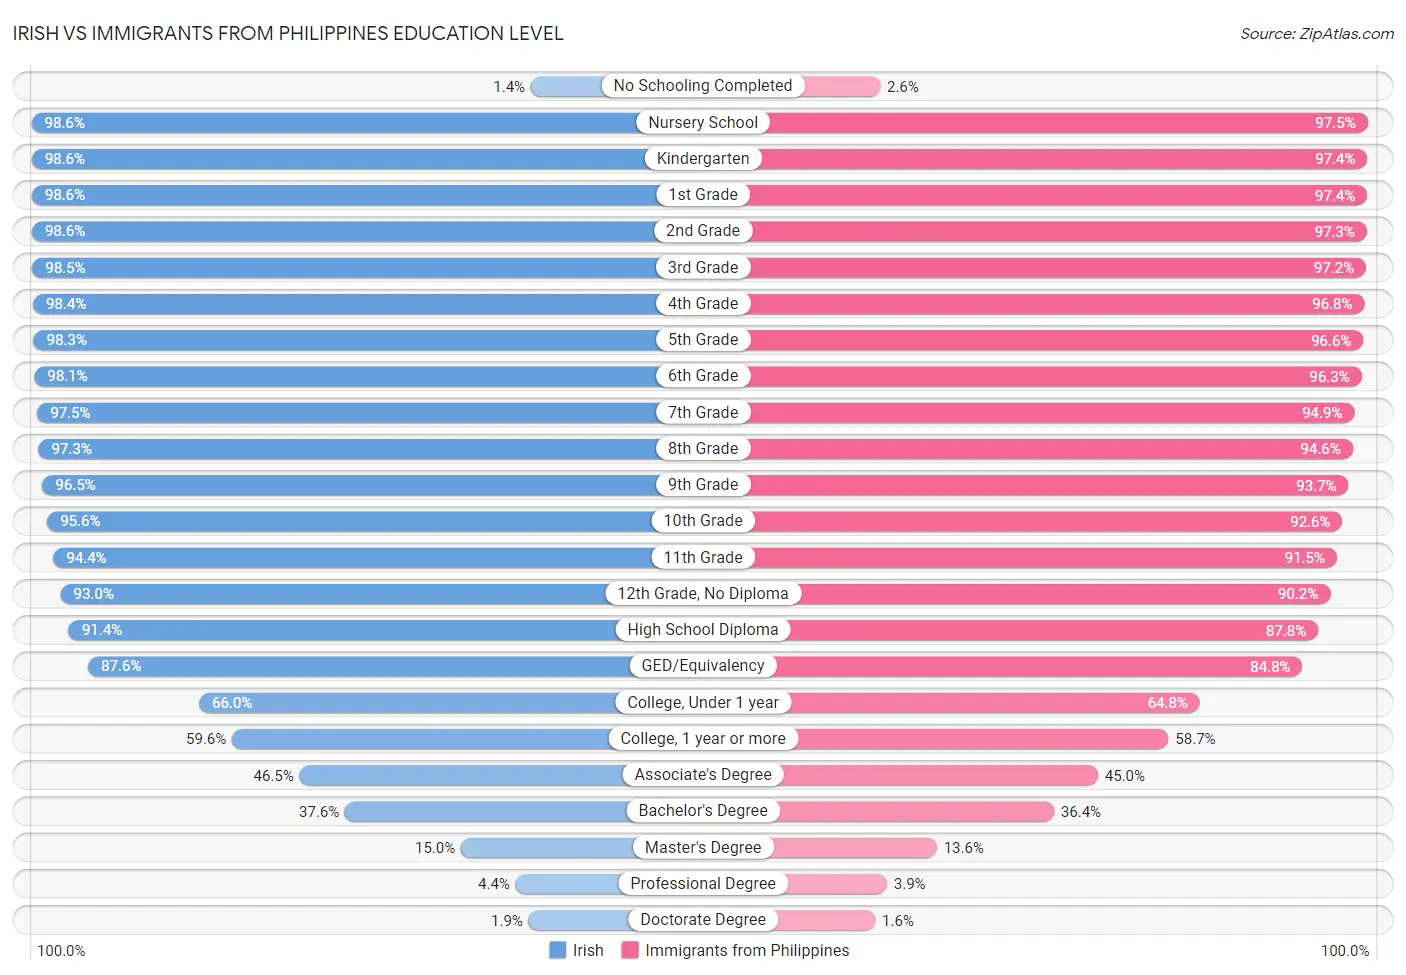 Irish vs Immigrants from Philippines Education Level